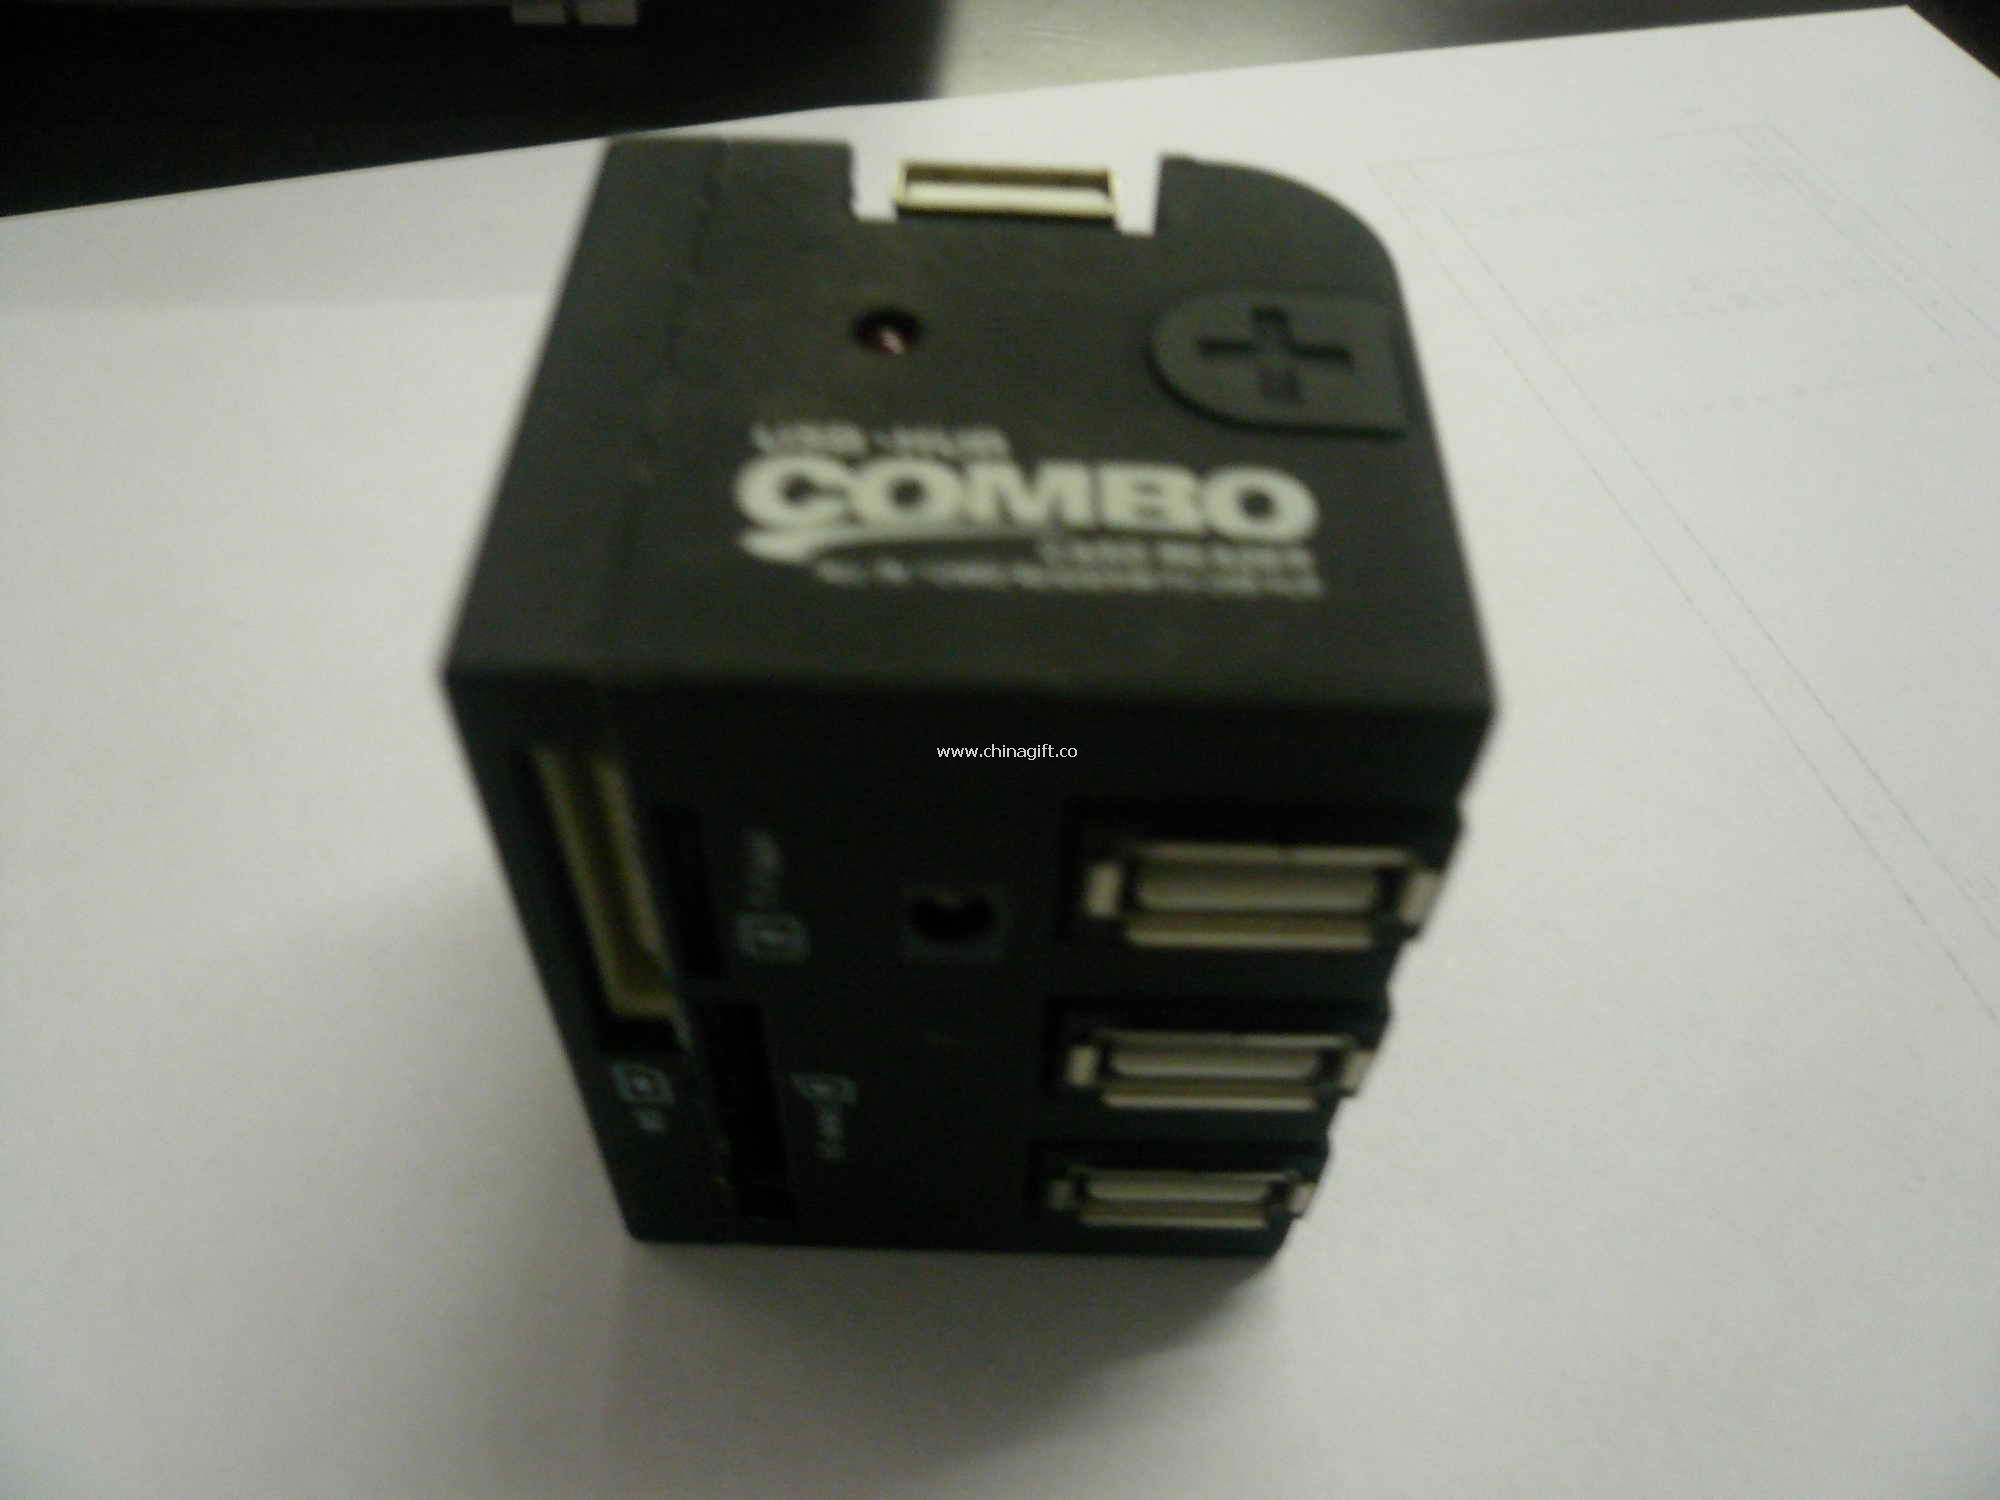 Combo Card Reader with USB Hub